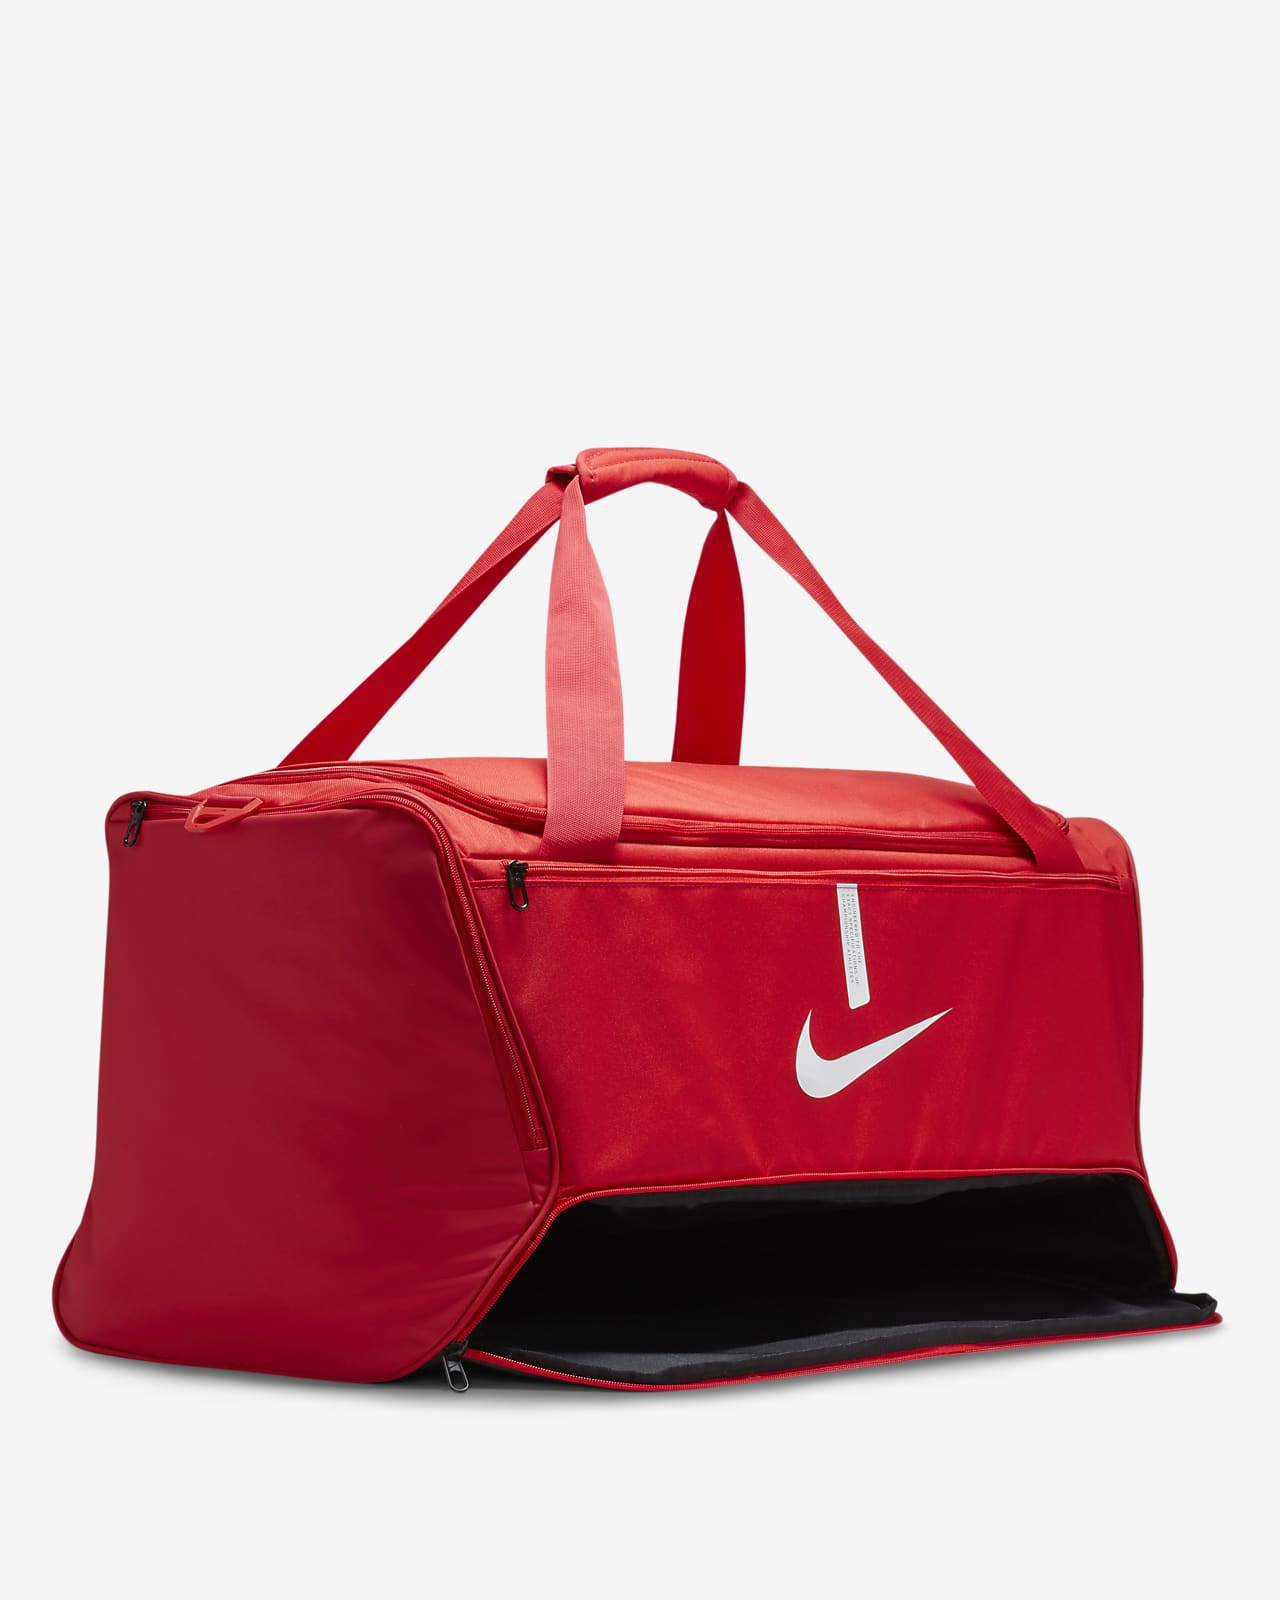 Nike Brasilia Medium Tennis Duffle - University Red